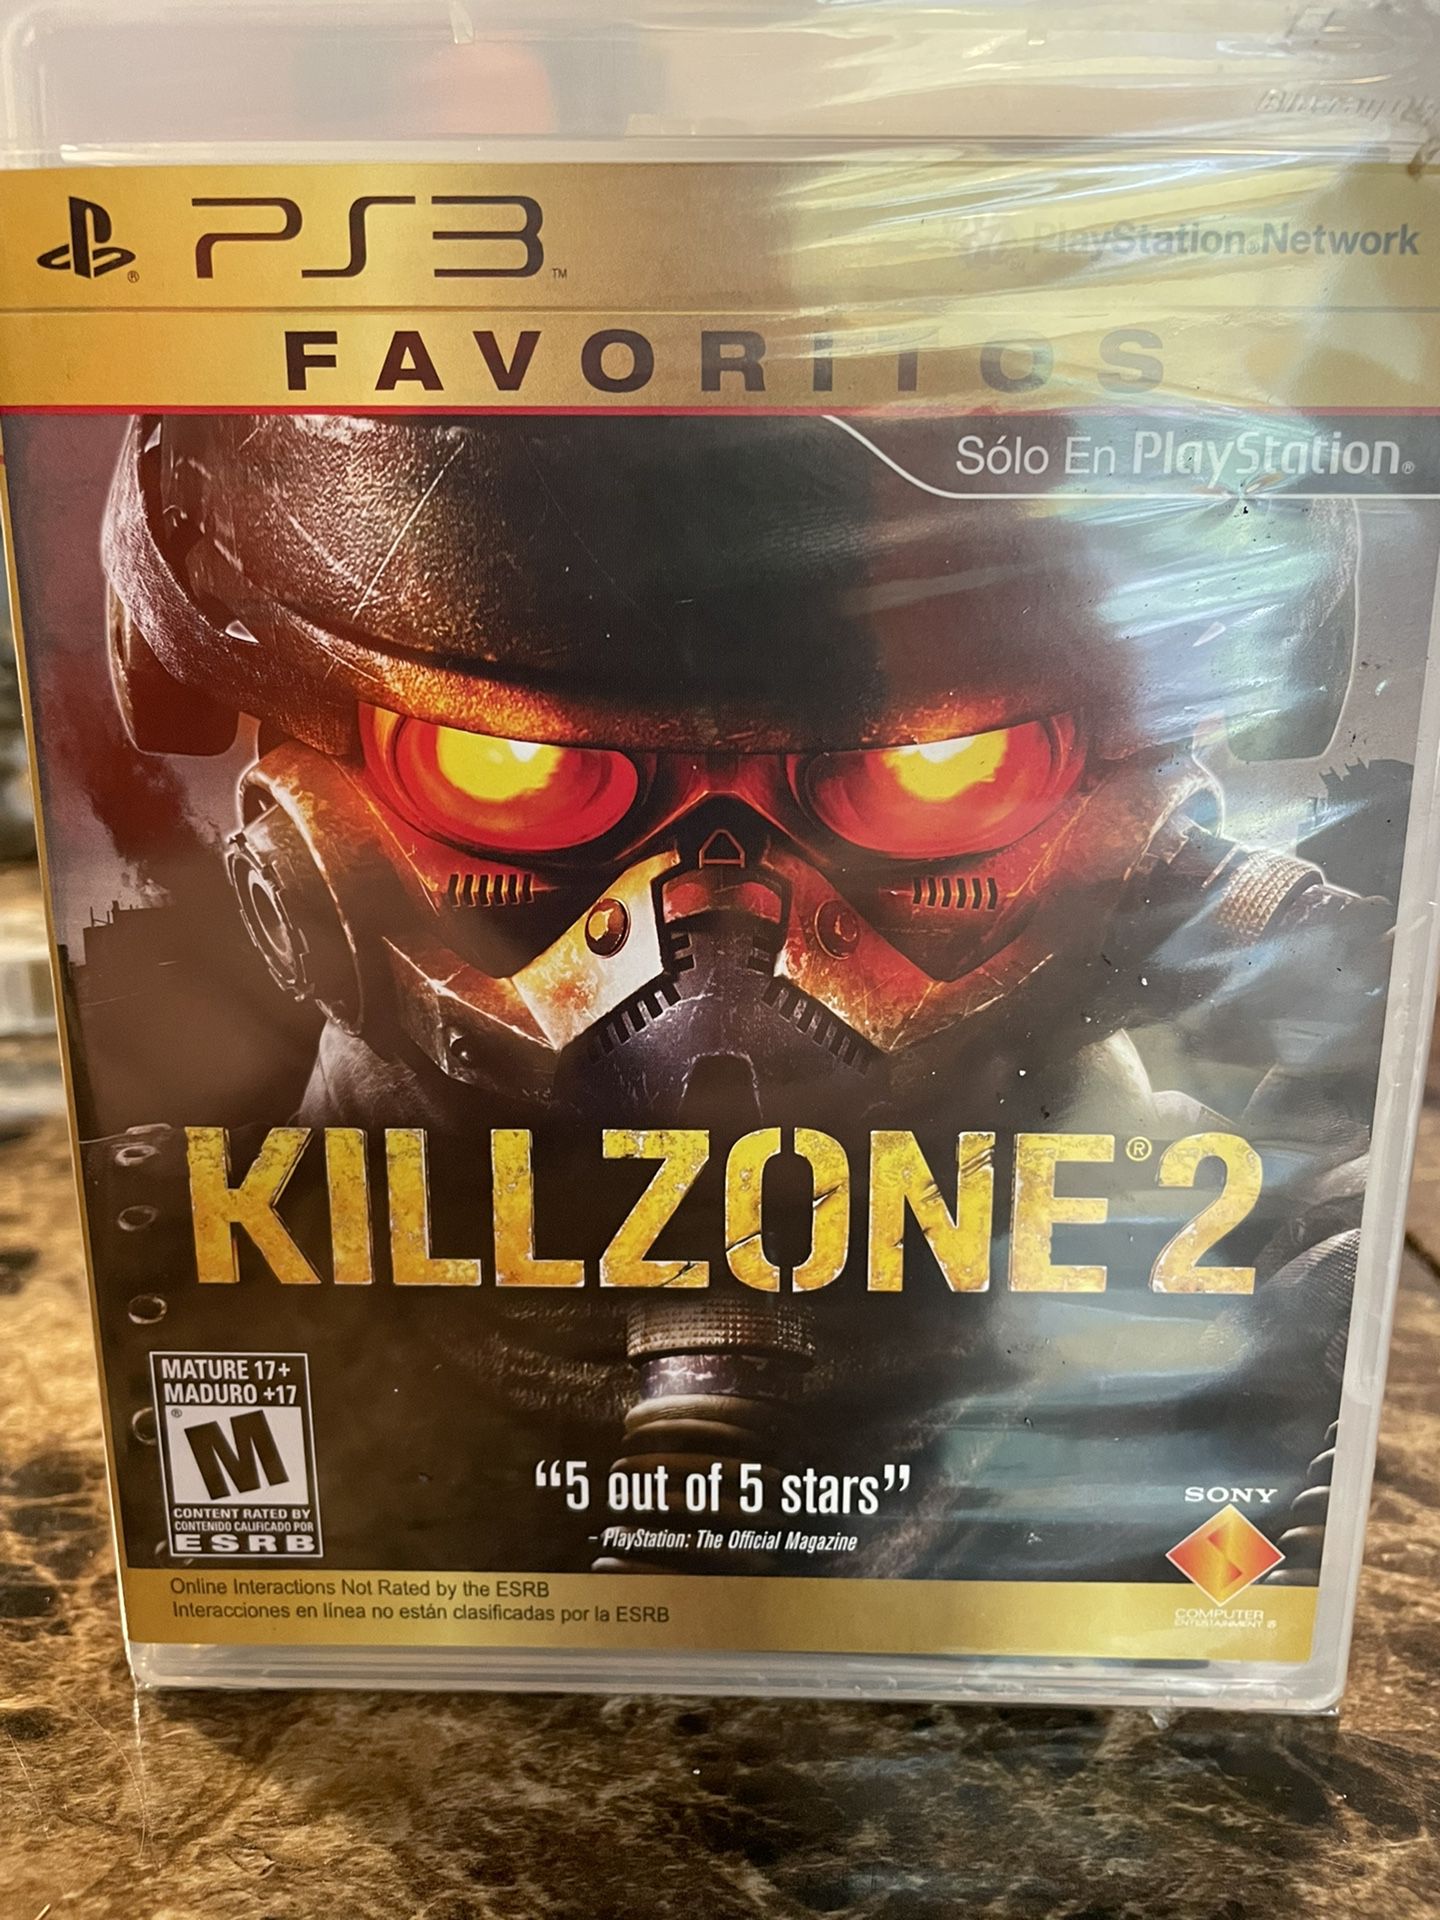 PS3 KILL ZONE 3 Brand NEW